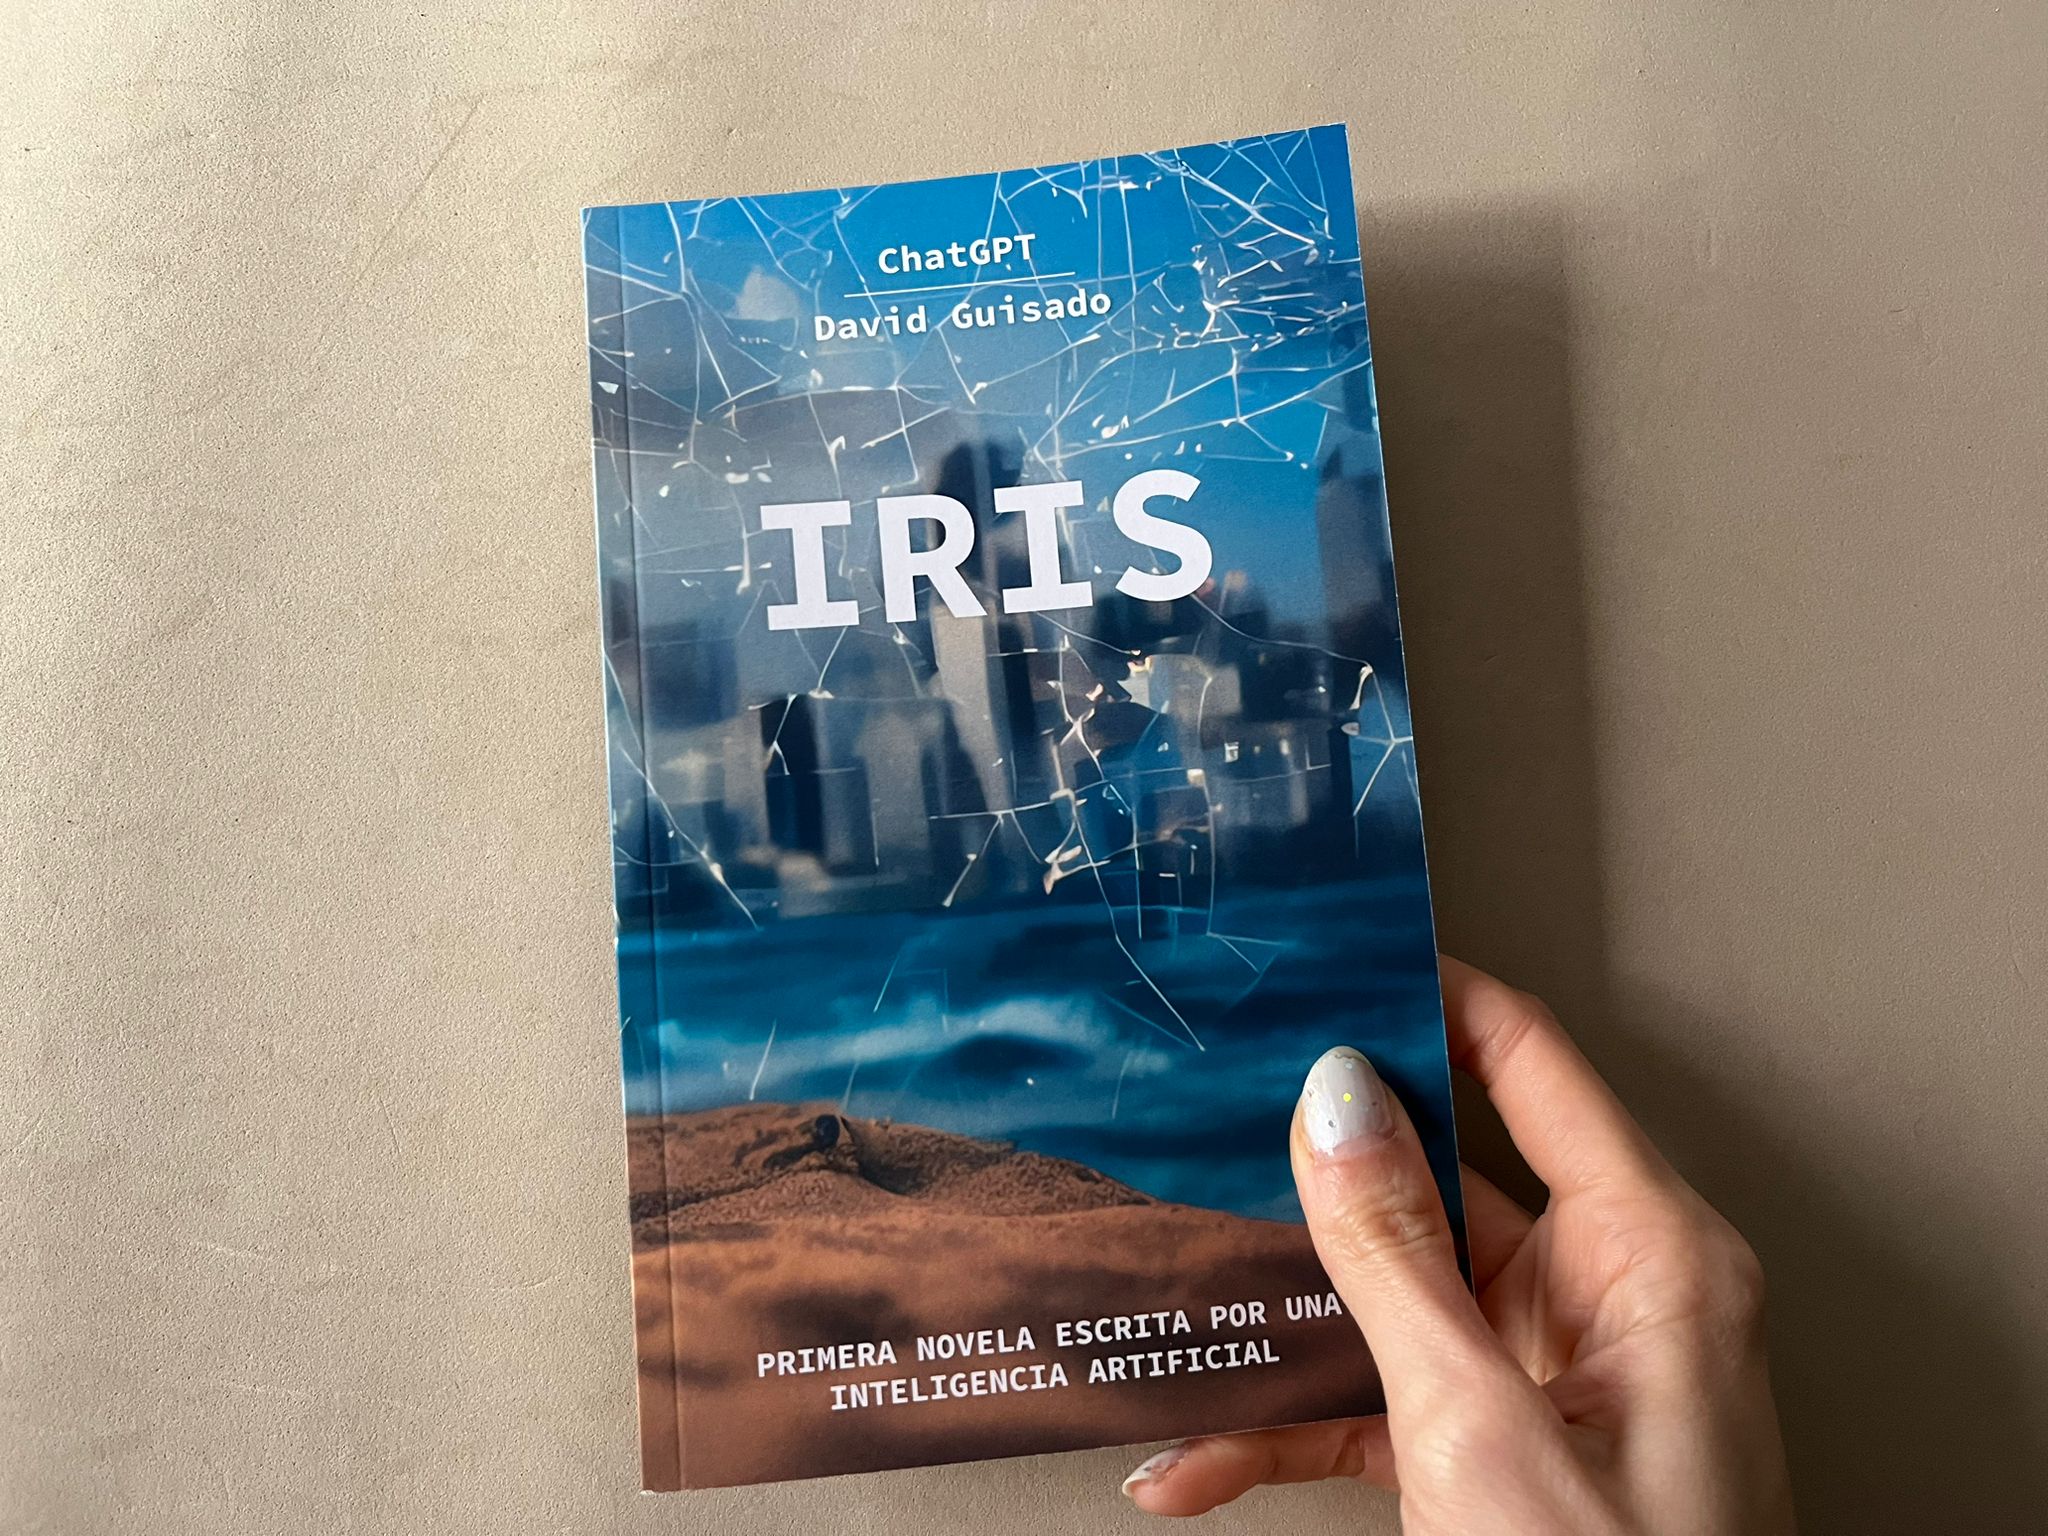 Reseña de “Iris”, primera novela escrita por una inteligencia artificial, de David Guisado | Chat GPT | Por Daniela González